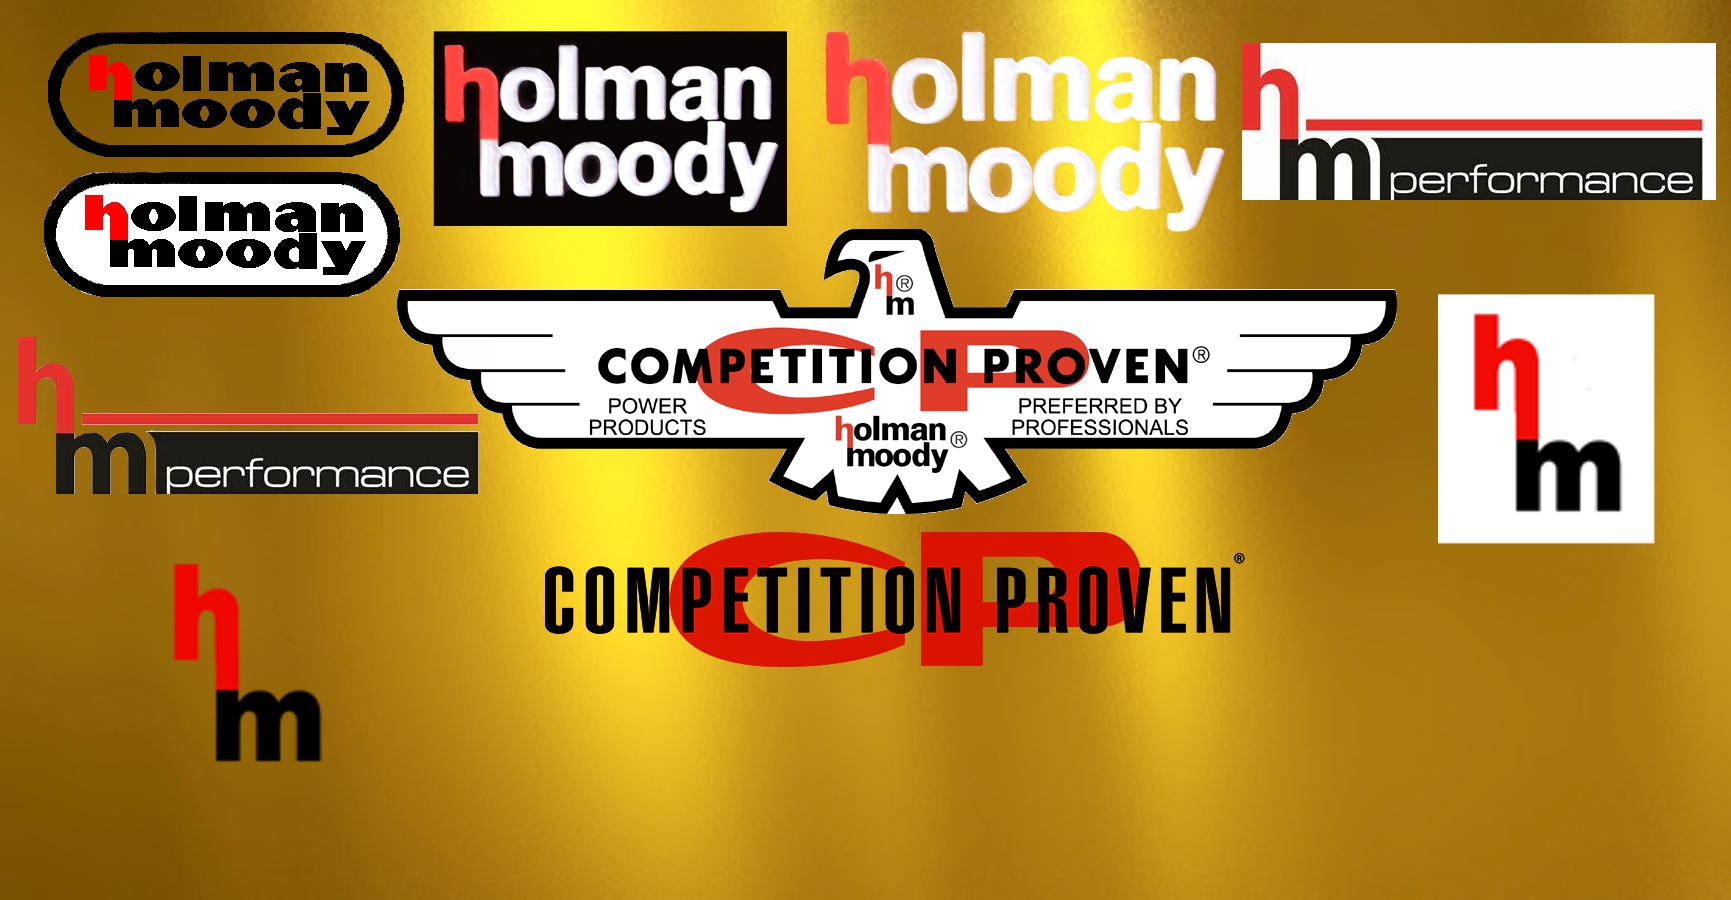 Holman Moody logos.jpg